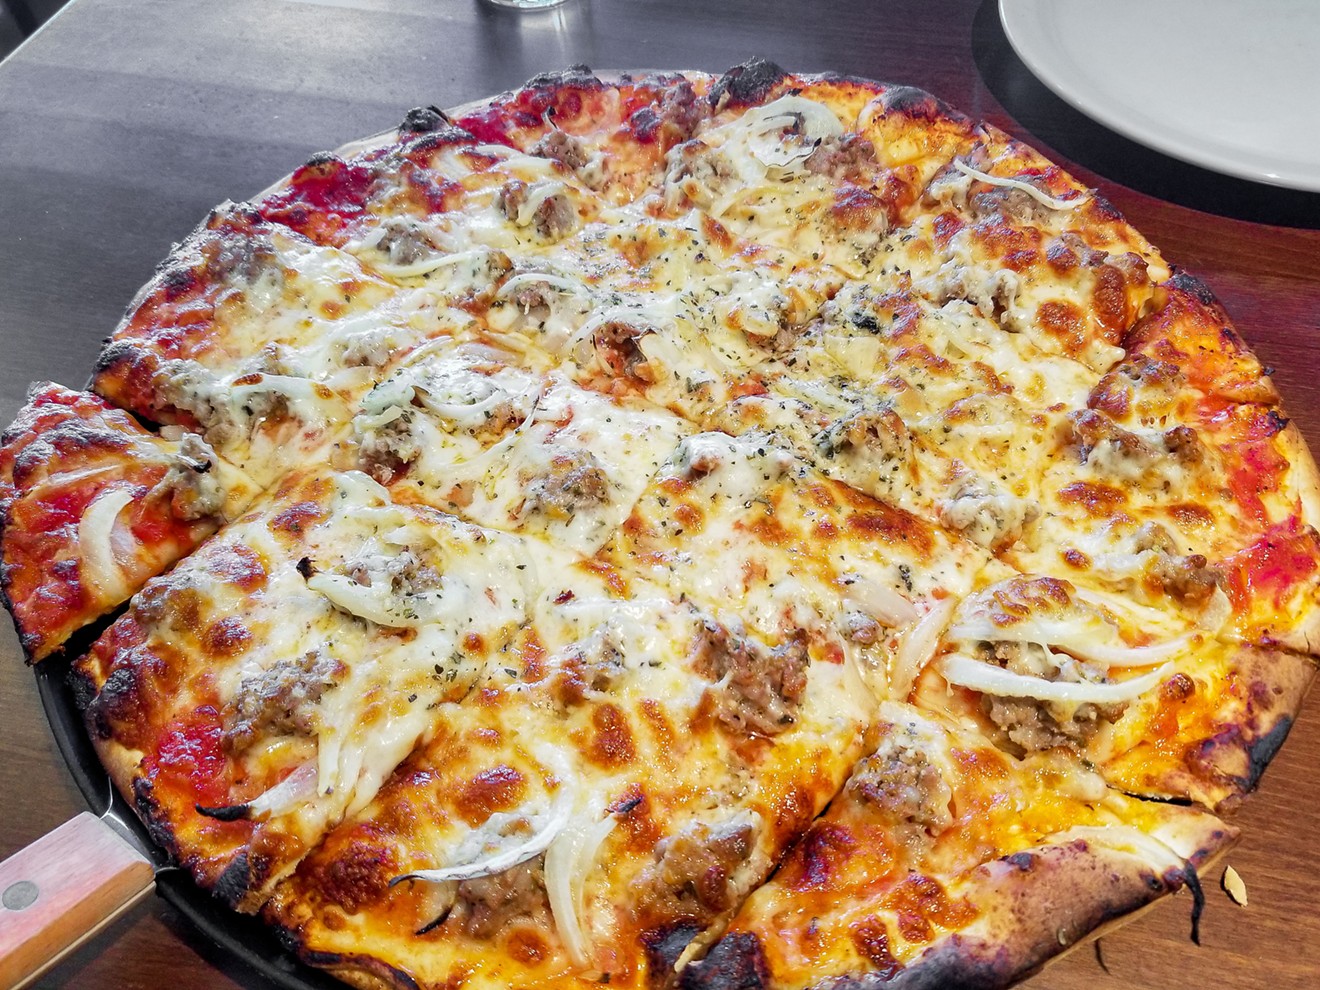 Italian sausage and onion pizza, Rosati's version of Chicago tavern-style thin crust.